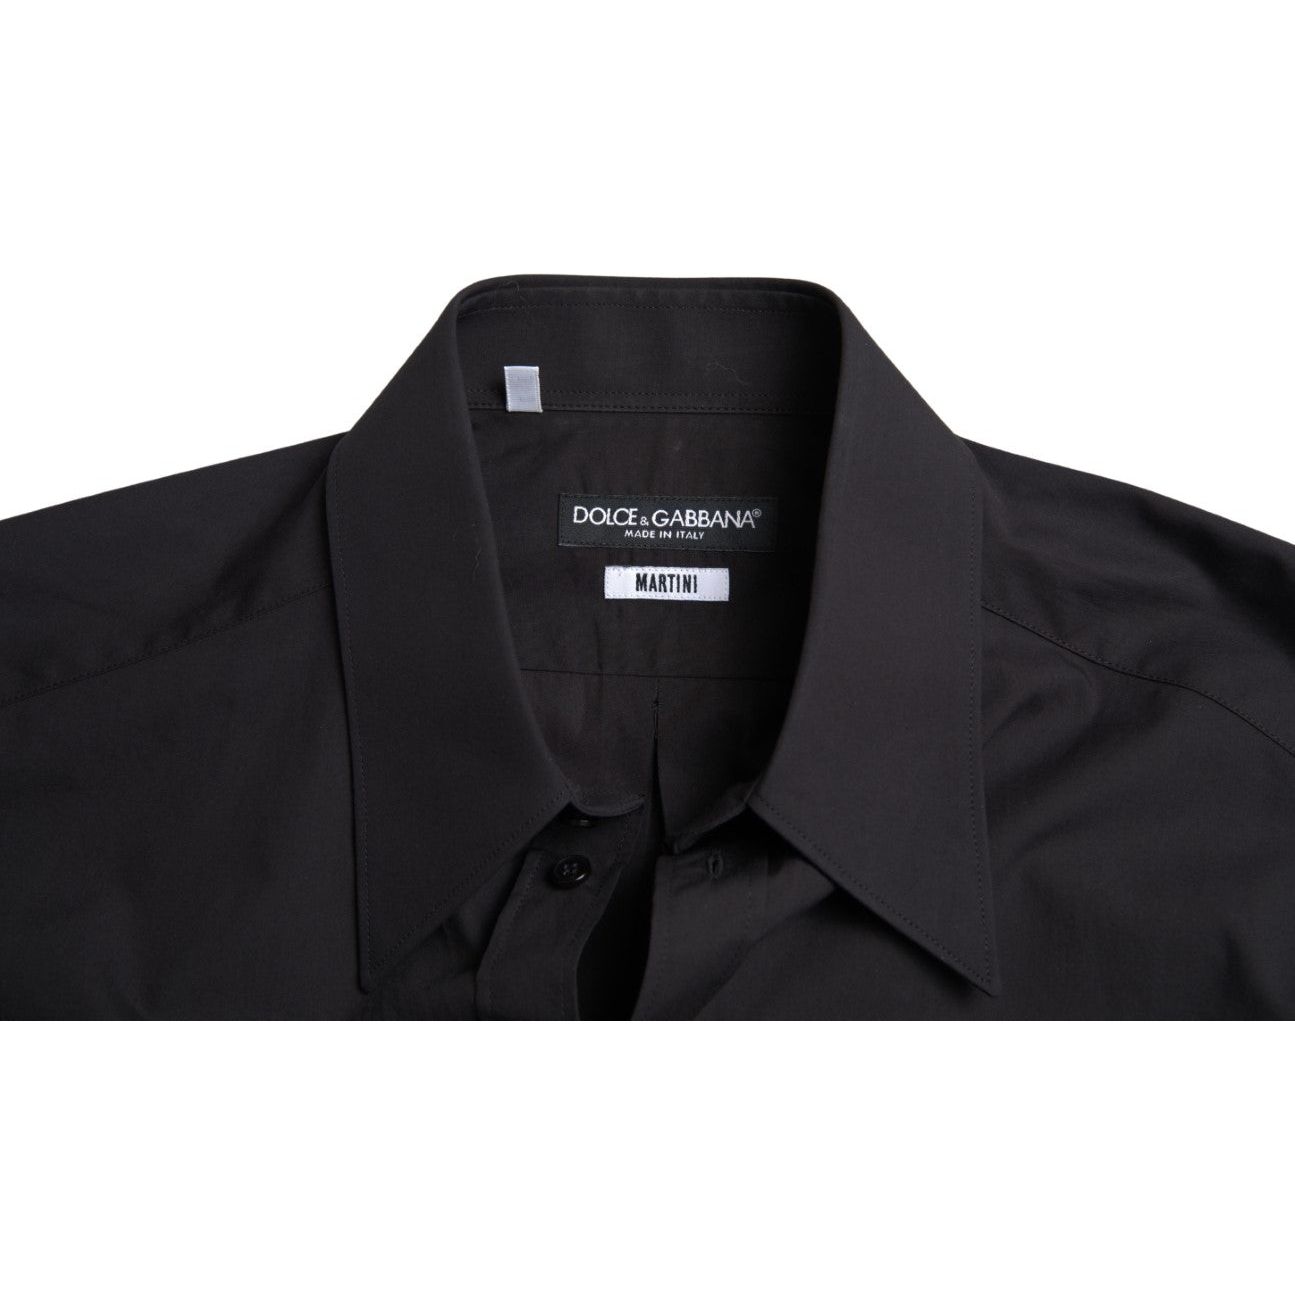 Dolce & Gabbana Elegant Slim Fit Black Cotton Dress Shirt black-cotton-men-long-sleeves-martini-shirt